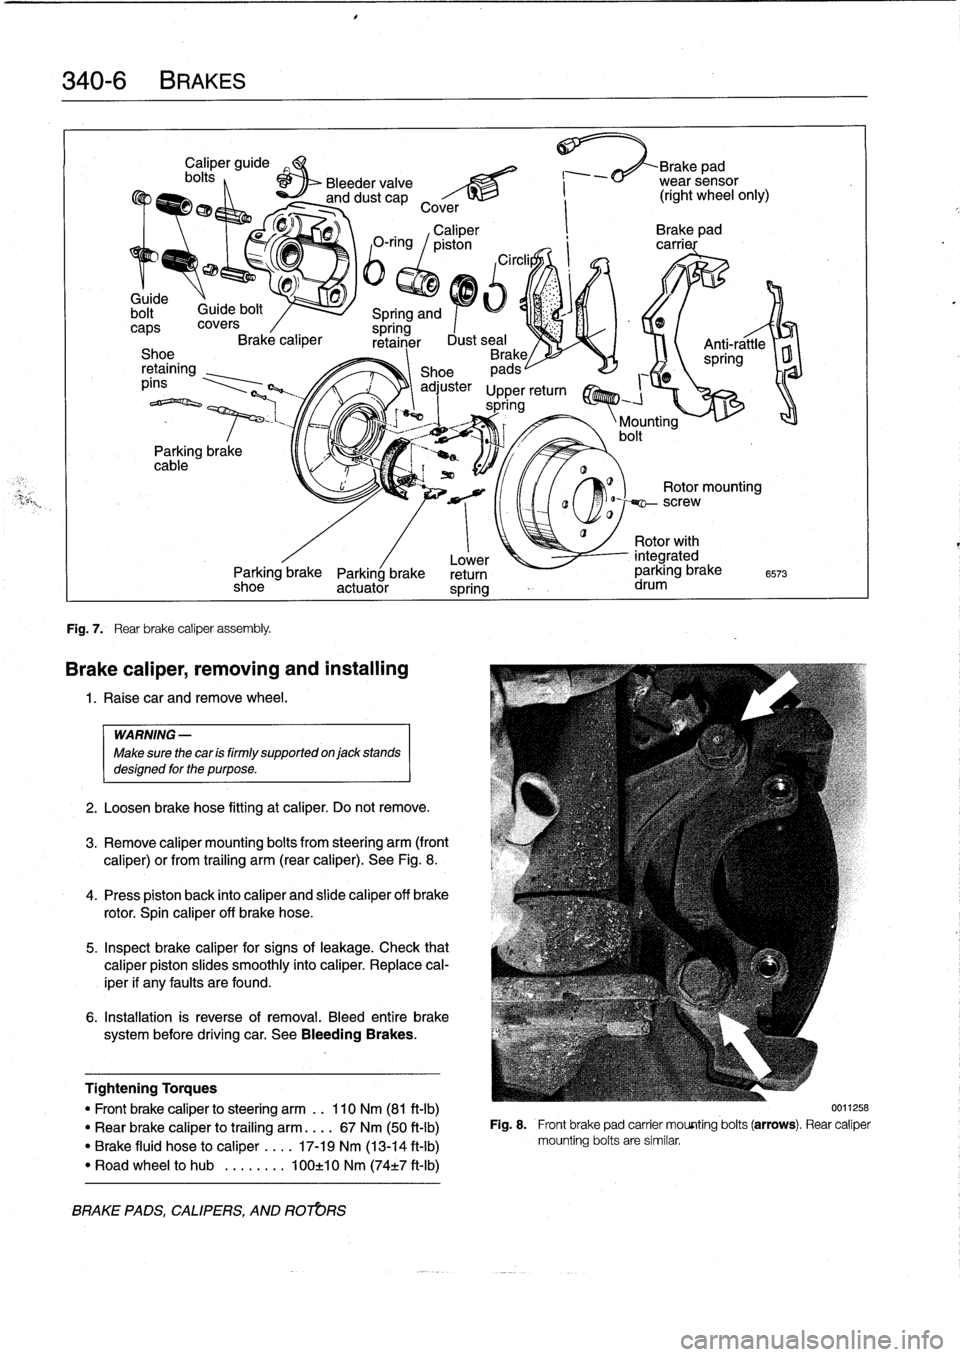 BMW 323i 1993 E36 Owners Manual 
340-
6BRAKES

bolt~

	

Guide
bolt

caps
covers
Brake
caliper
Shoe
retaining
píns

Parking
brake
cable

Fig
.
7
.

	

Rear
brake
caliper
assembly
.

Caliper
guide

	

Brake

	

ad
bolts
,

	

Bleede